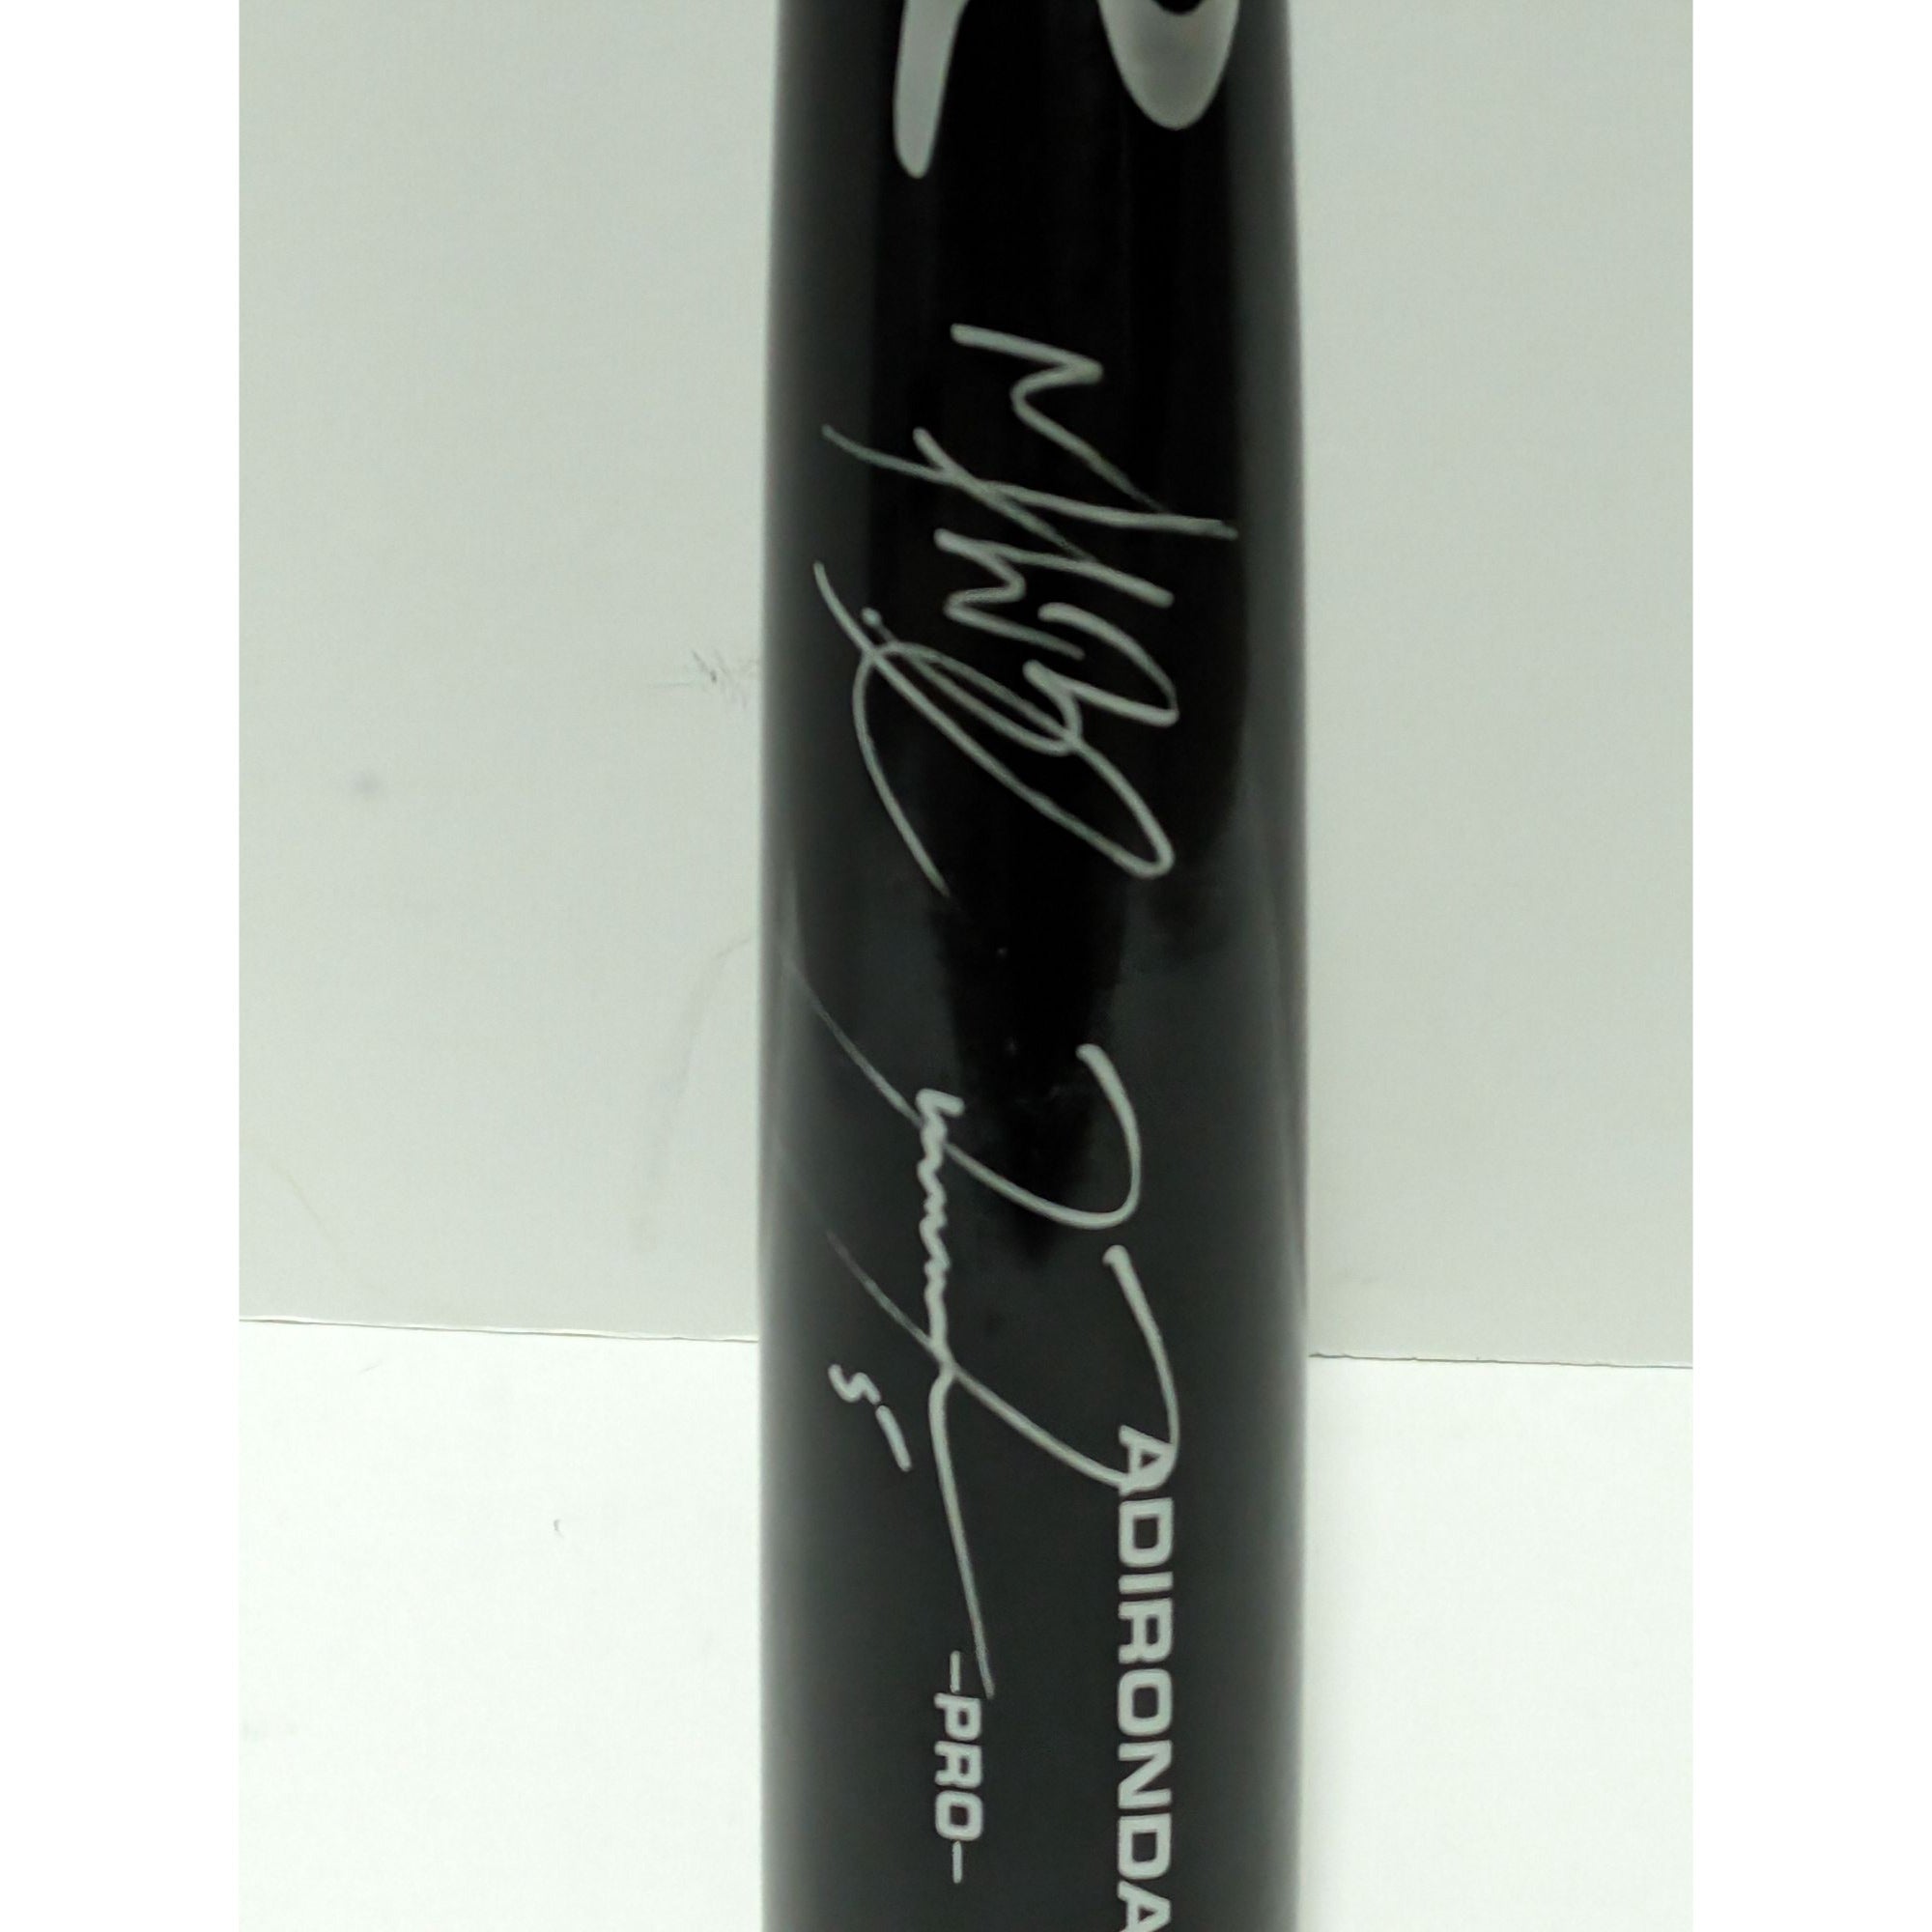 Los Angeles Dodgers Mookie Betts and Freddy Freeman chrome model baseball bat signed